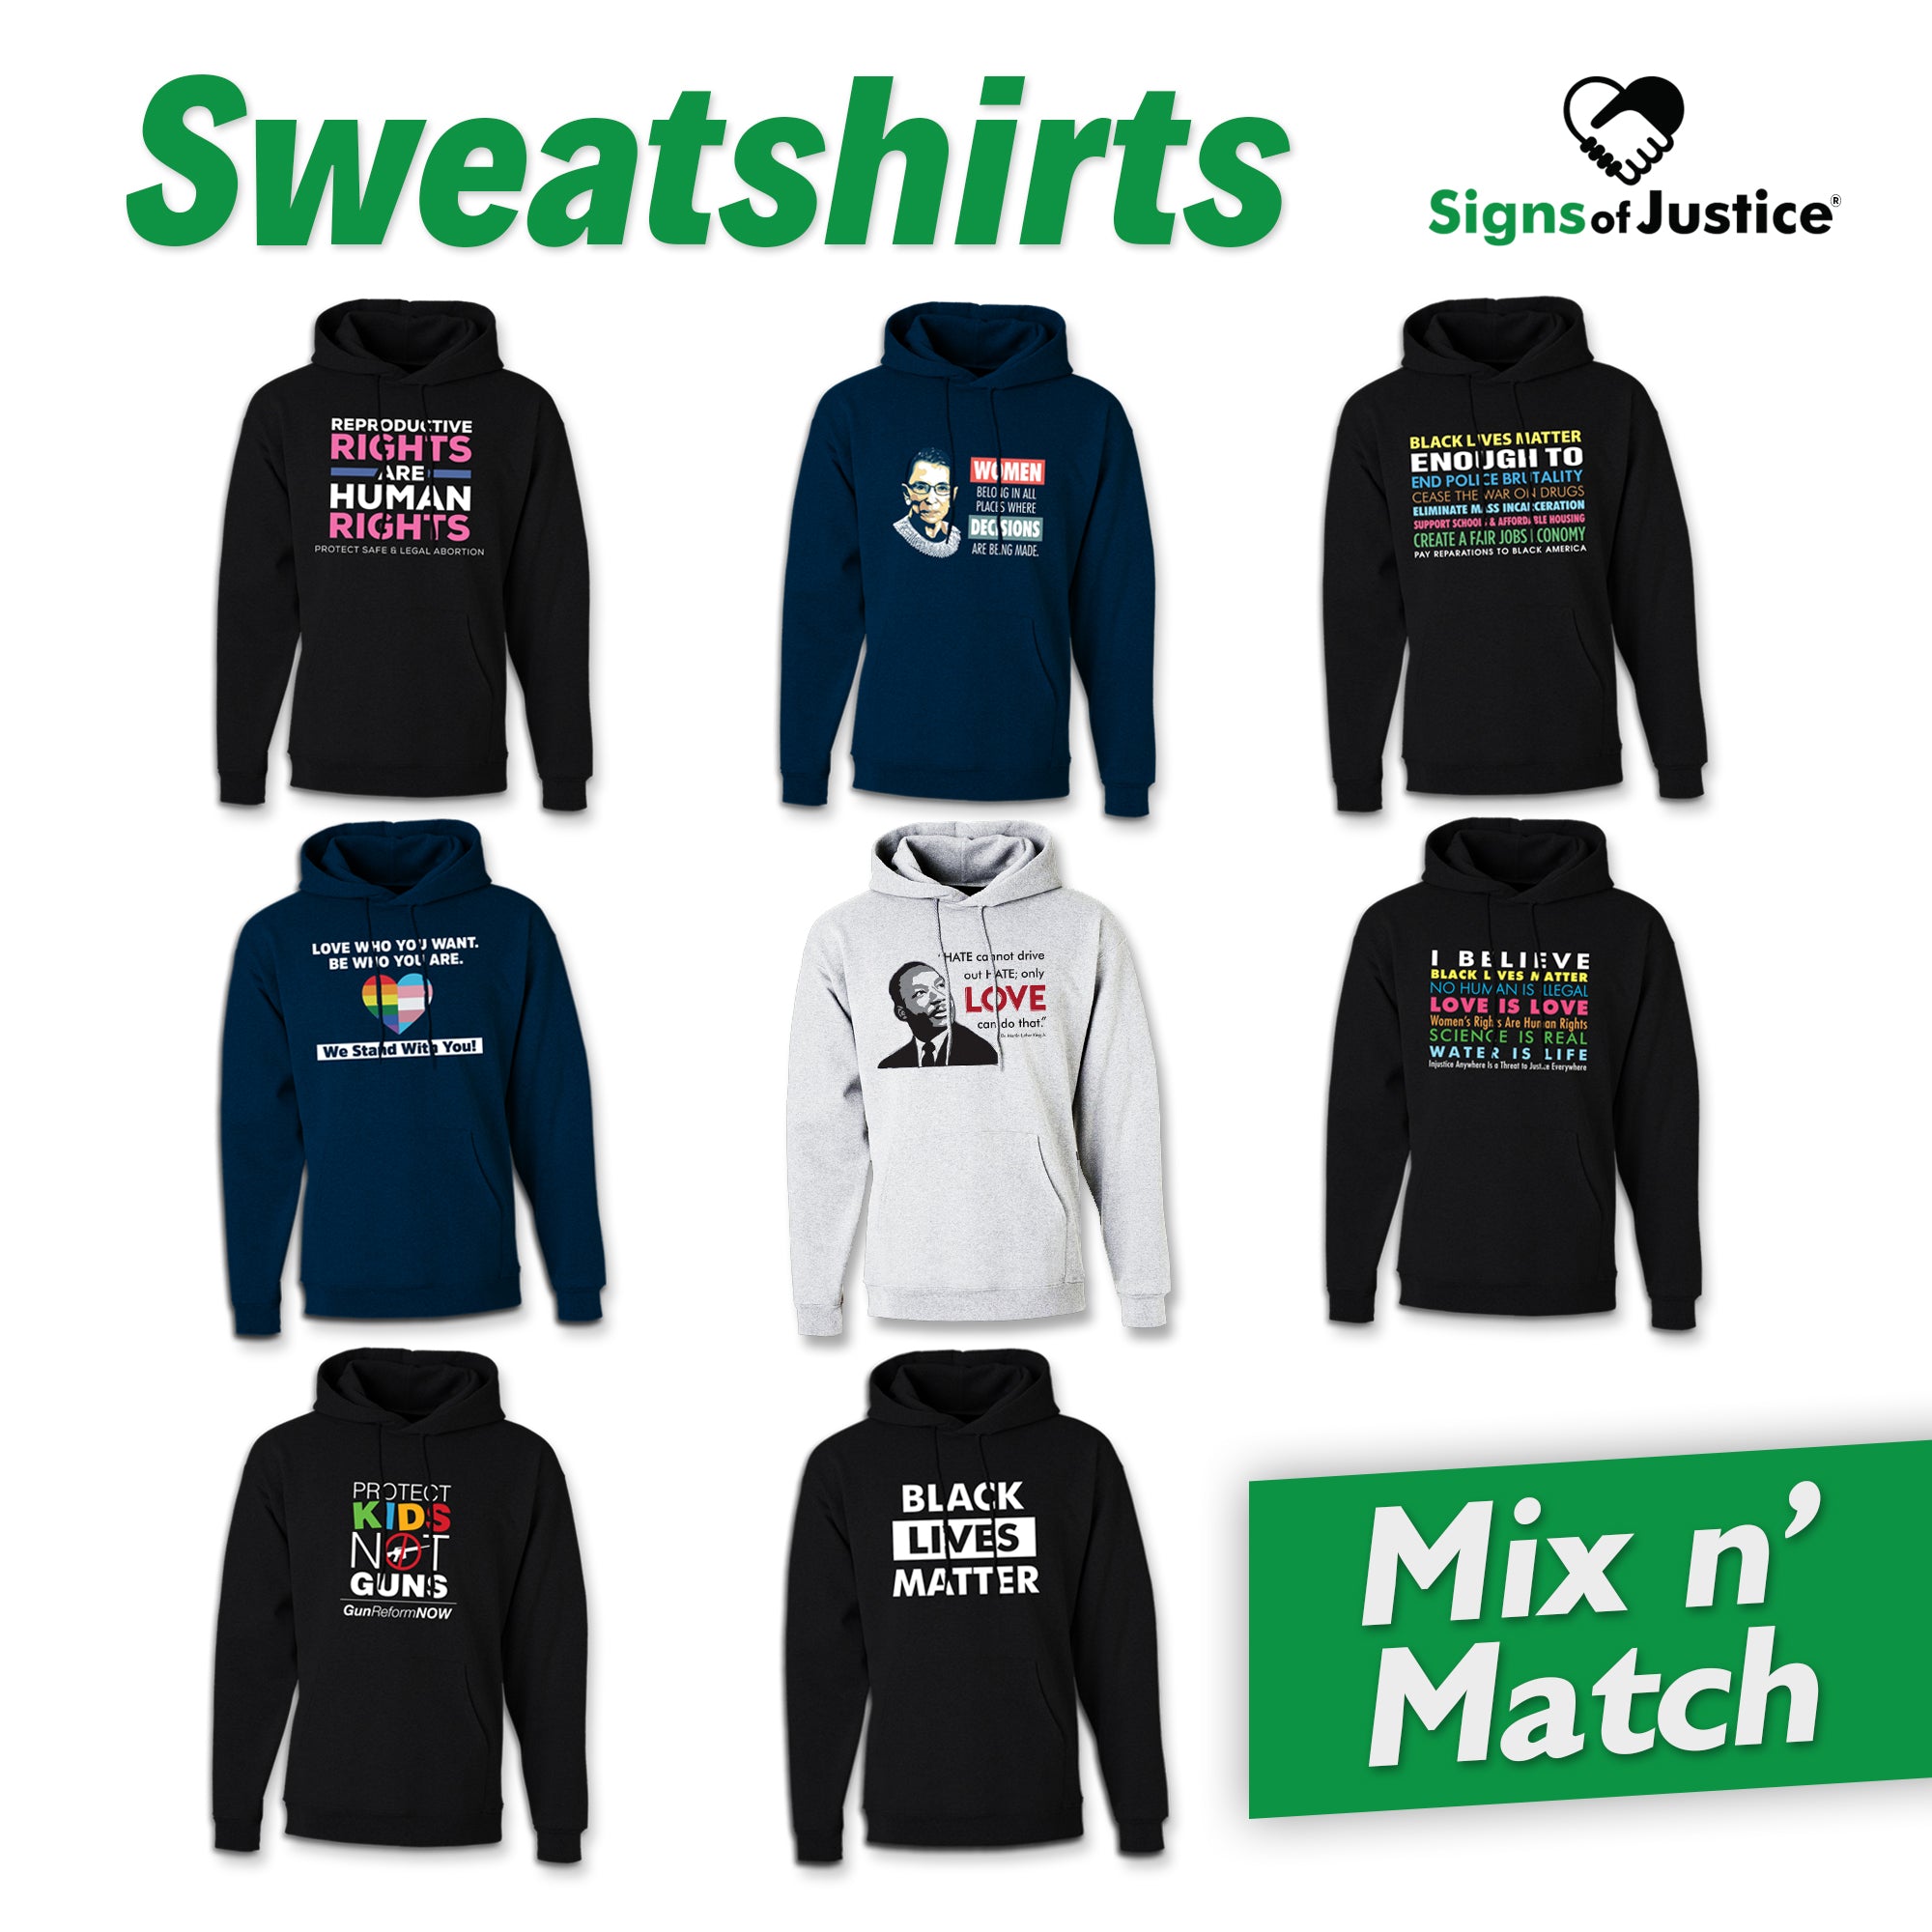 Sweatshirts - Mix n' Match